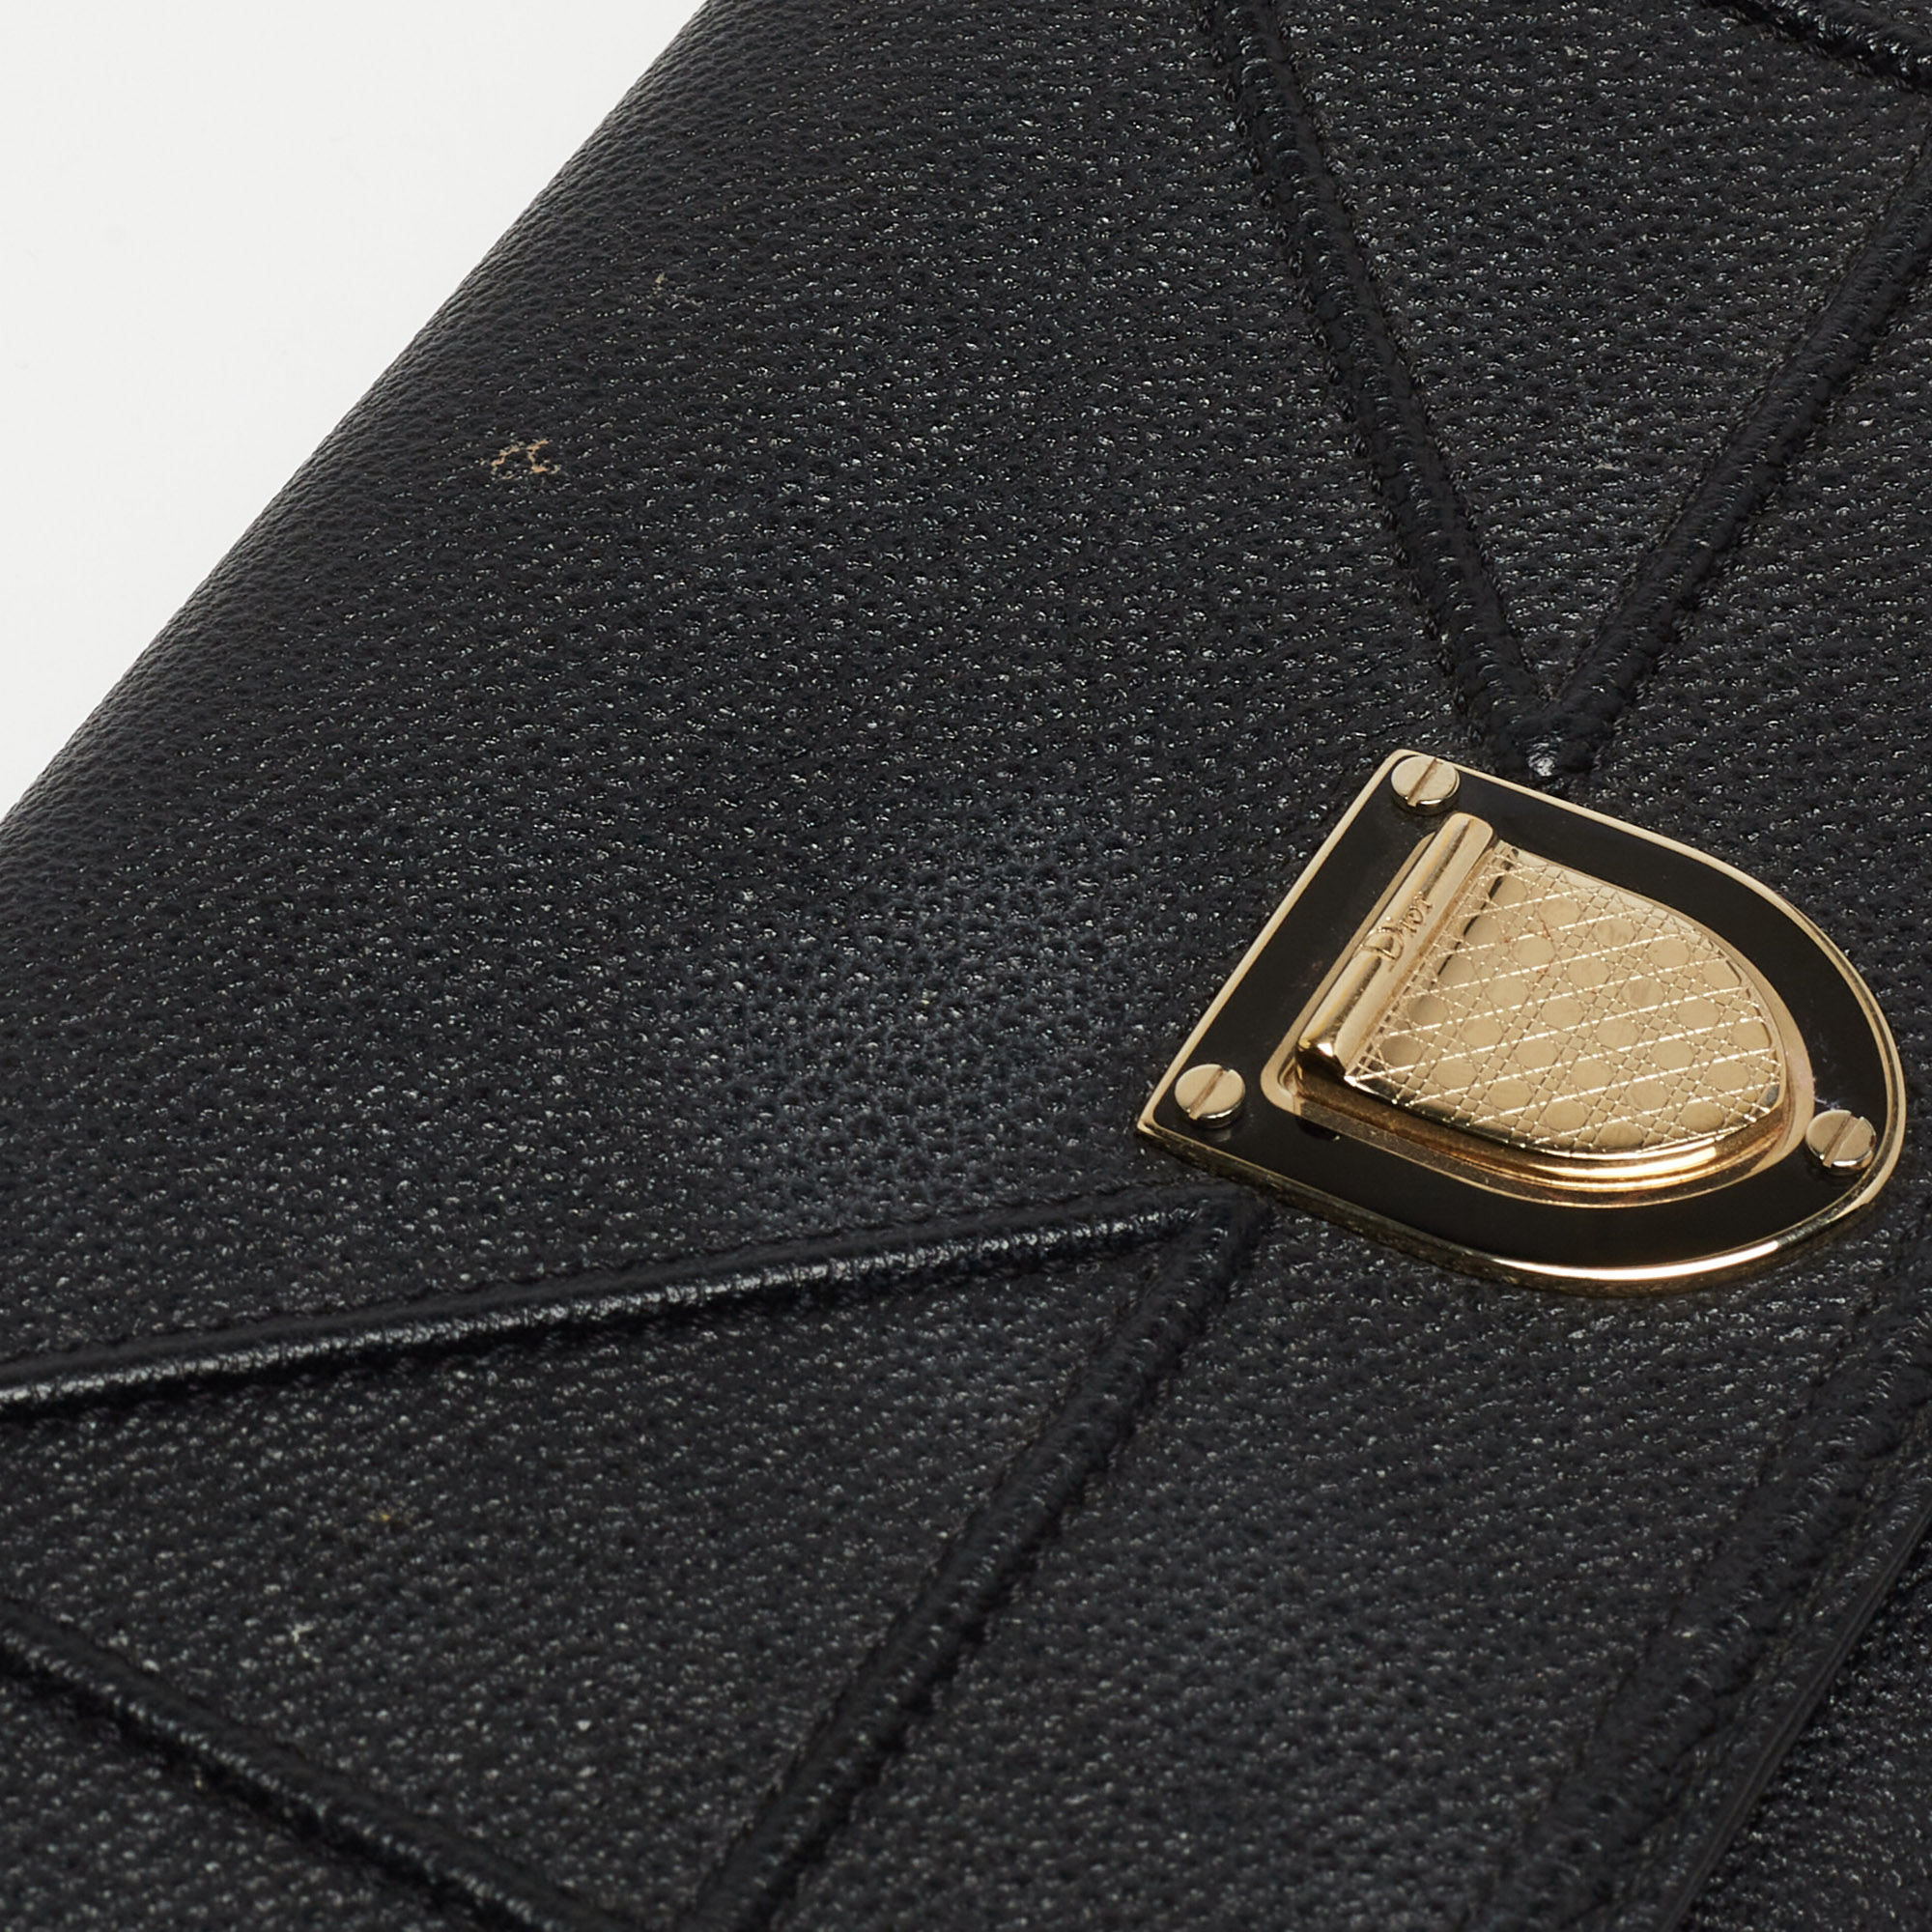 Dior Black Leather Diorama Wallet